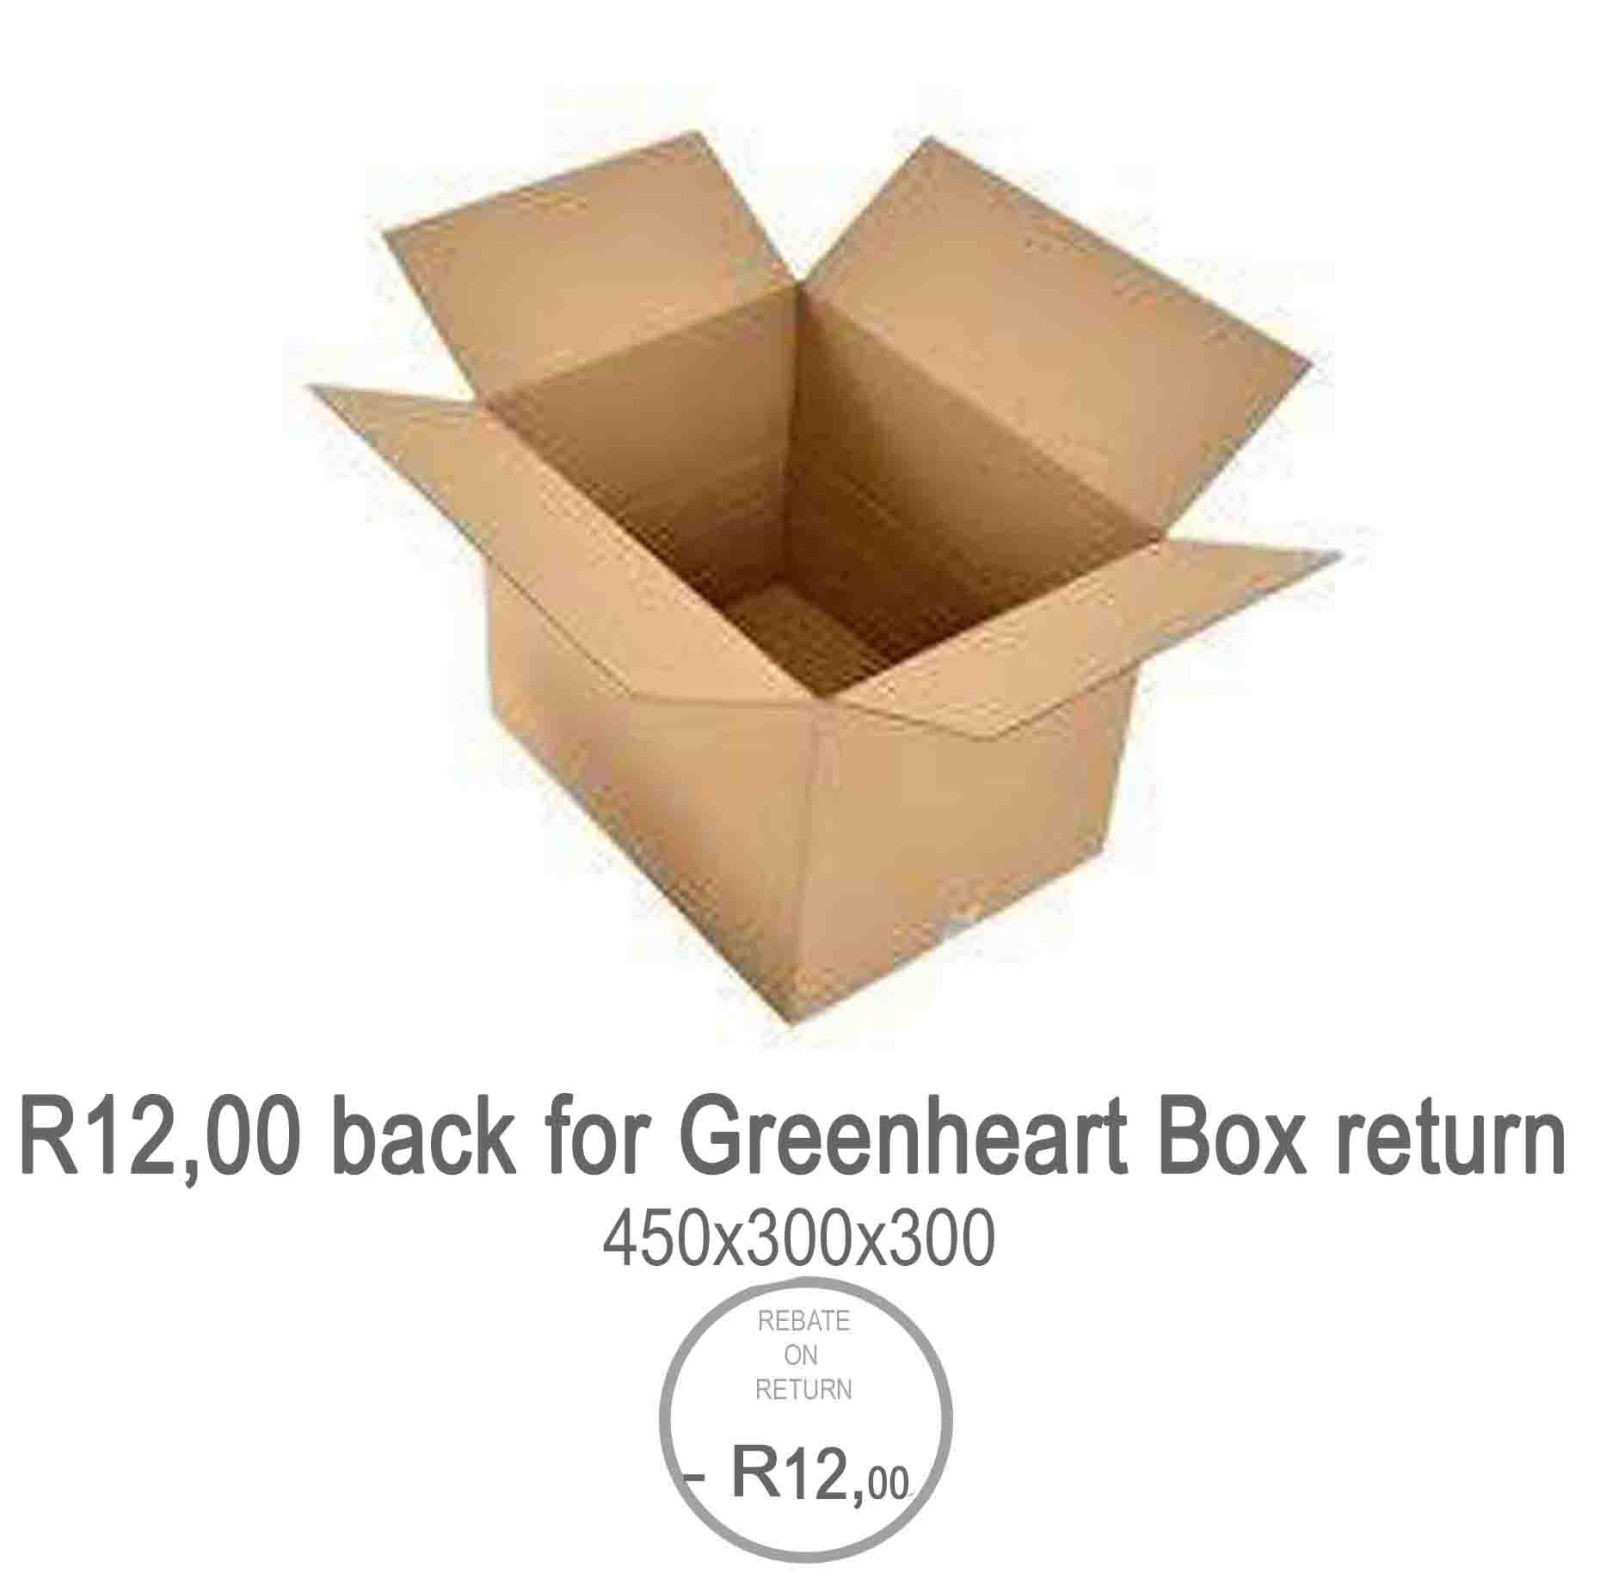 cardboard-box-450x300x300-r12-rebate-on-return-green-heart-organics